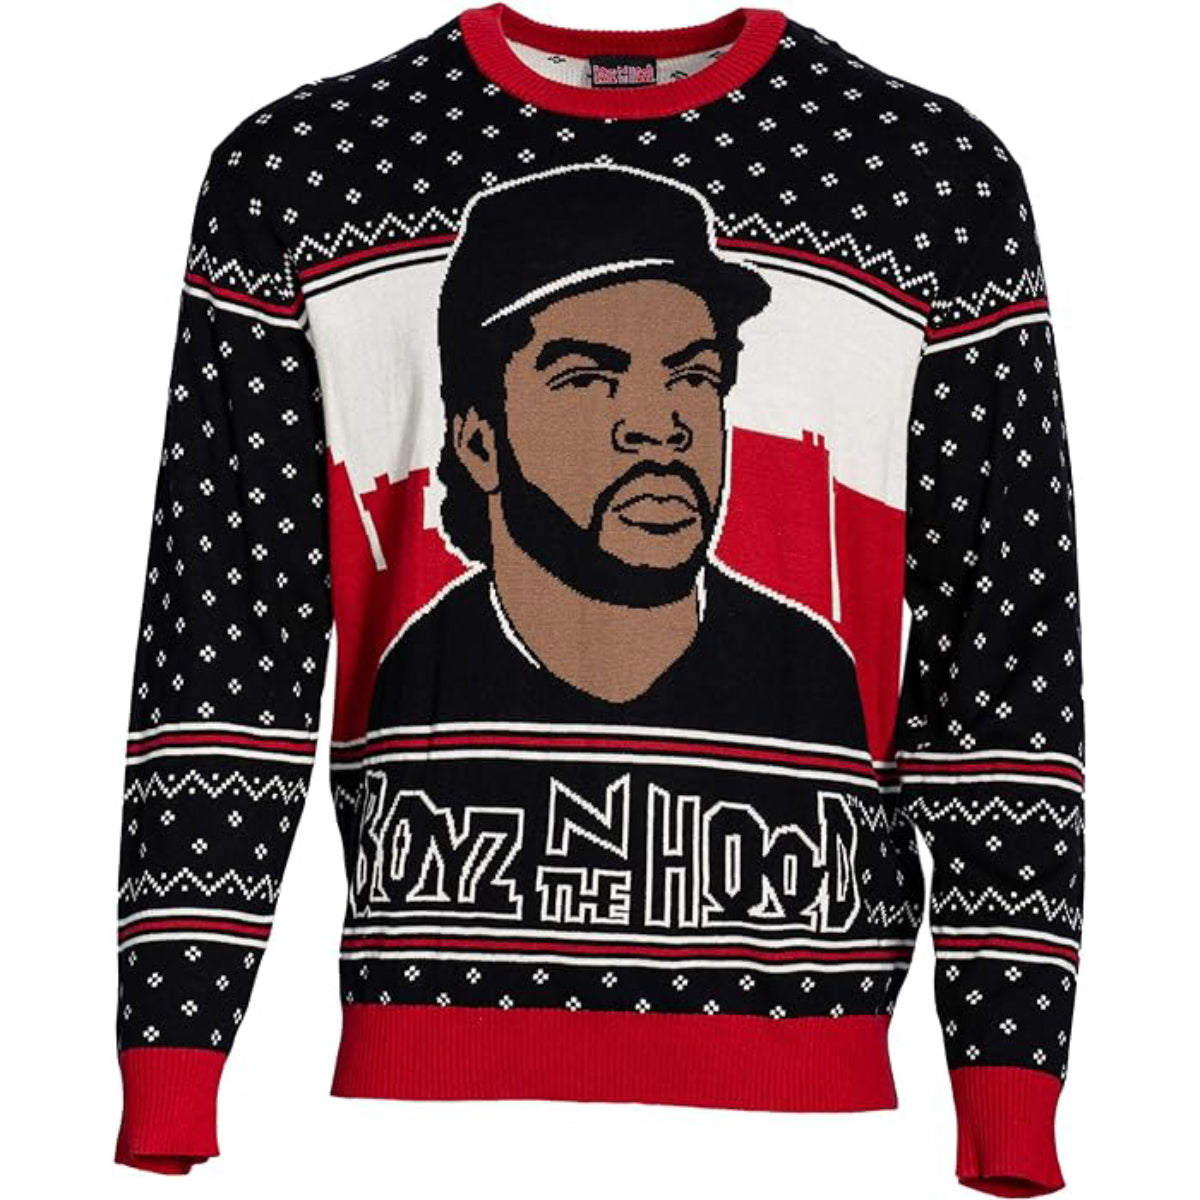 Boyz n the Hood "Doughboy" Ugly Christmas Sweater